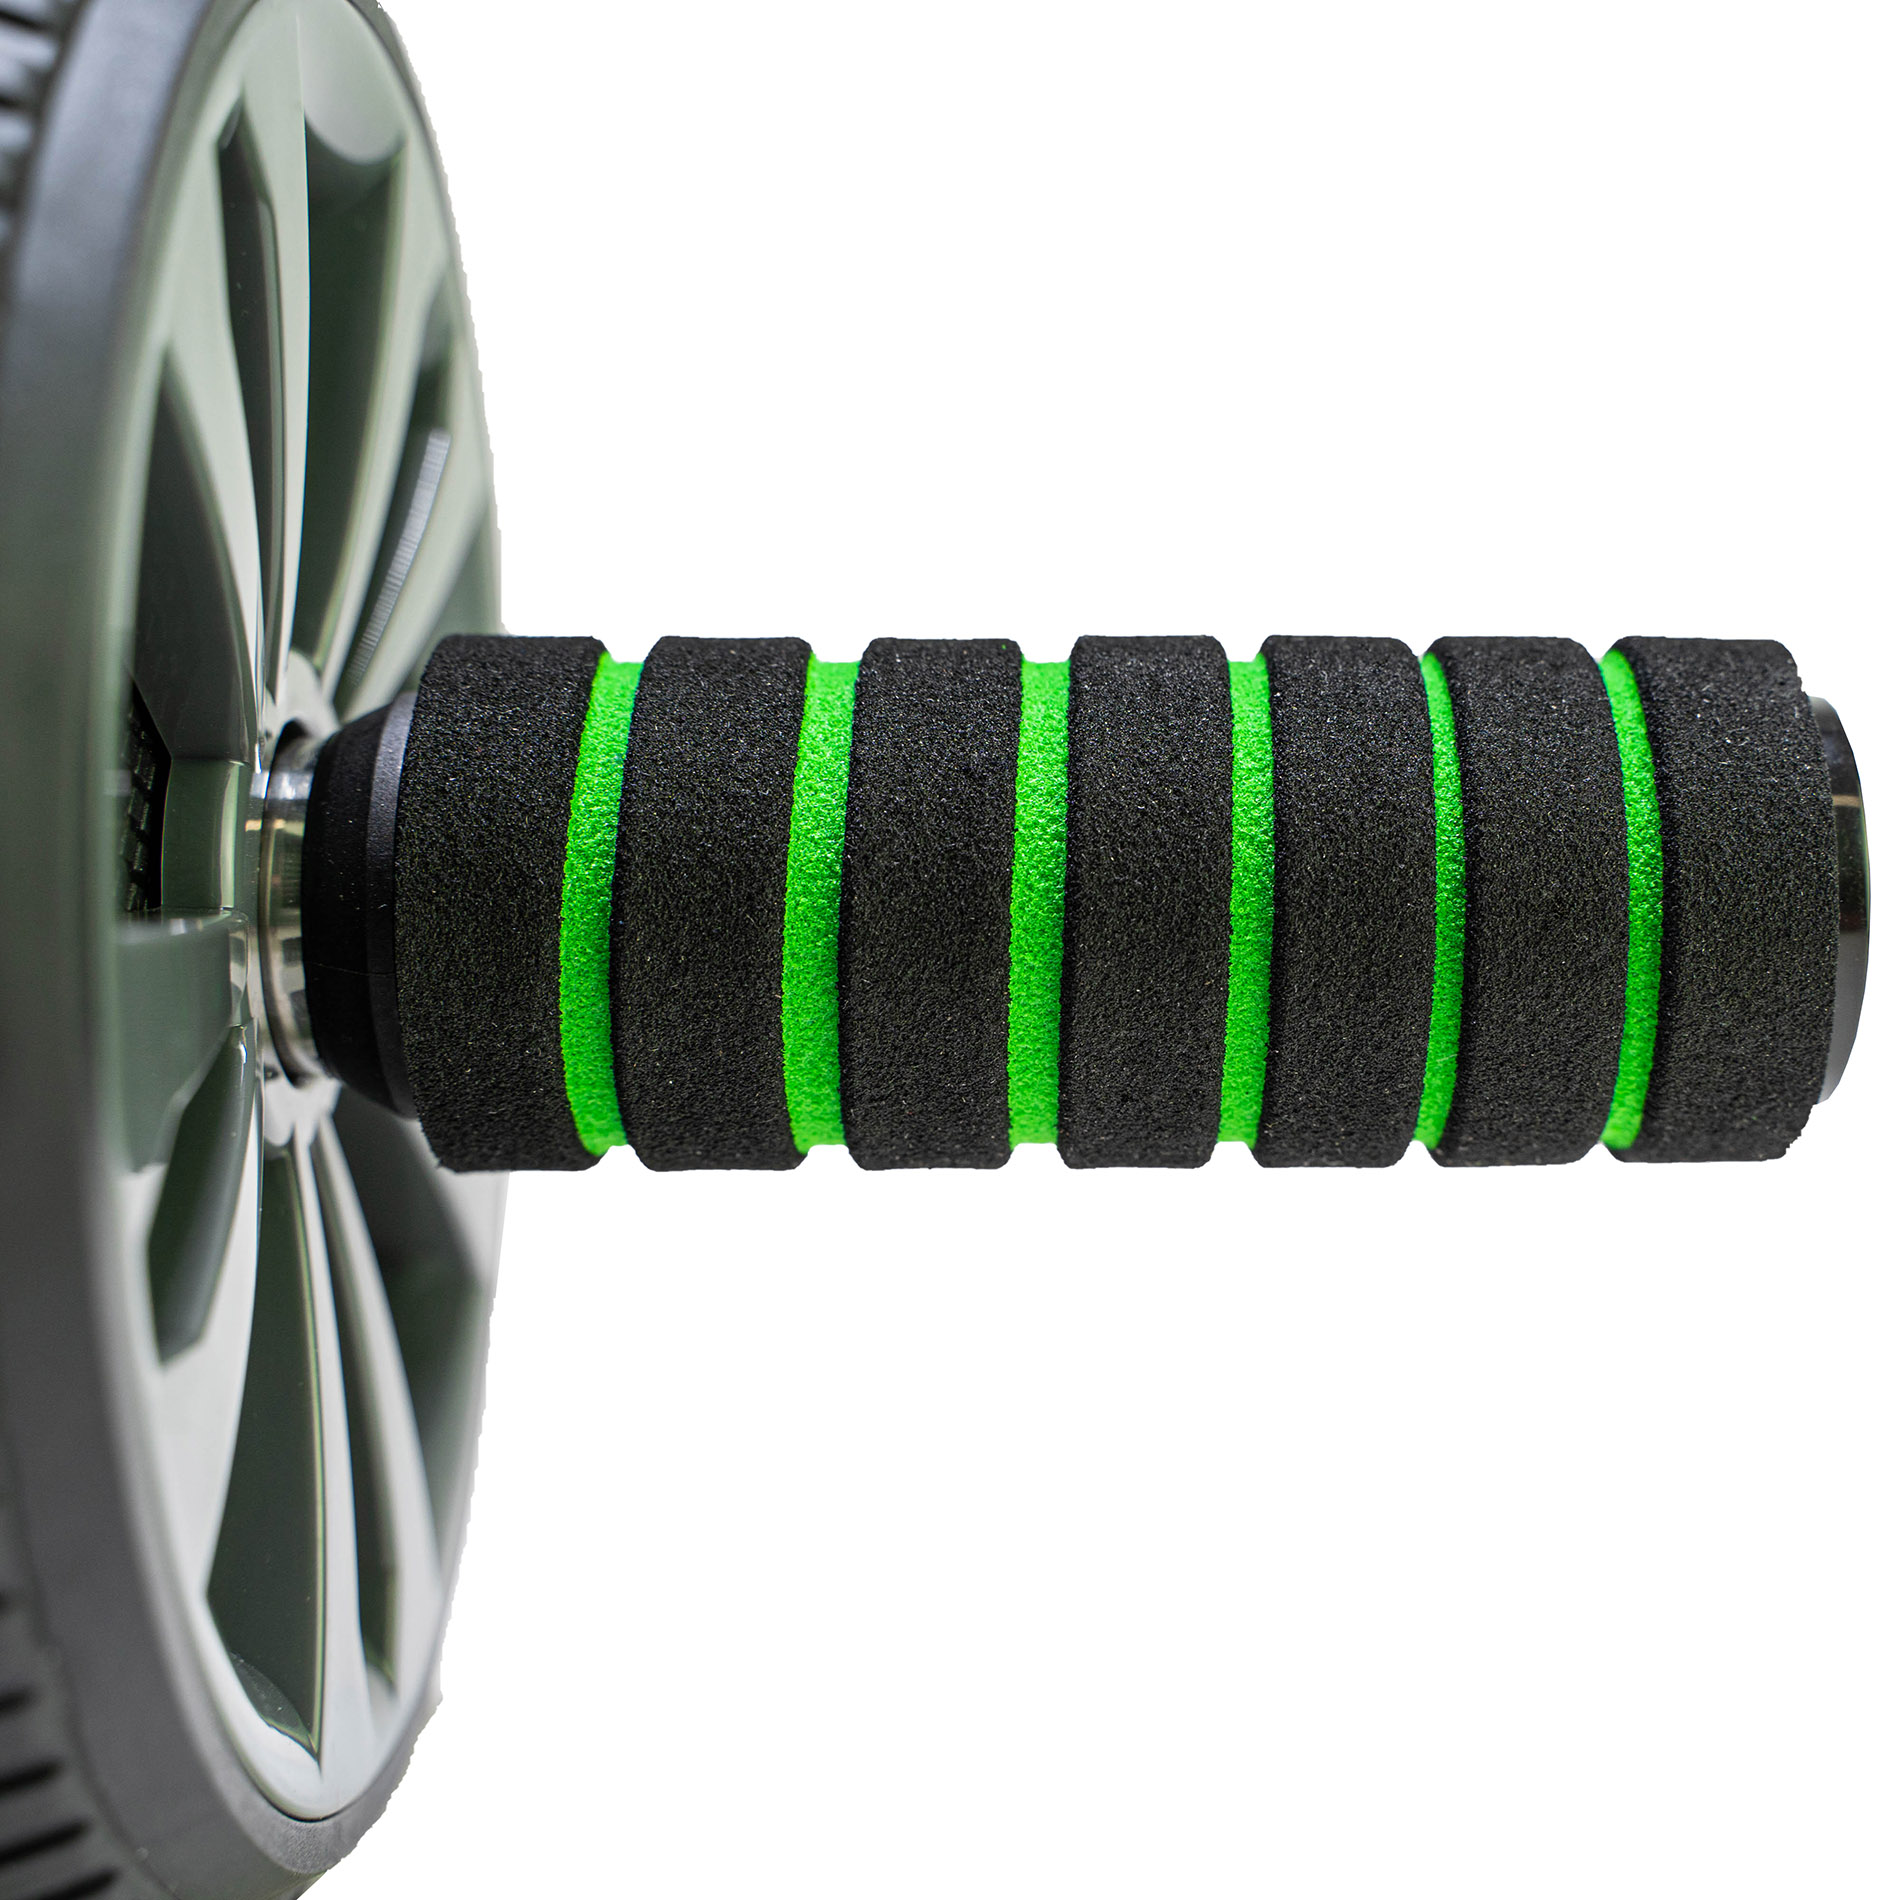 Tunturi Pro Exercise Wheel Deluxe met NBR mat